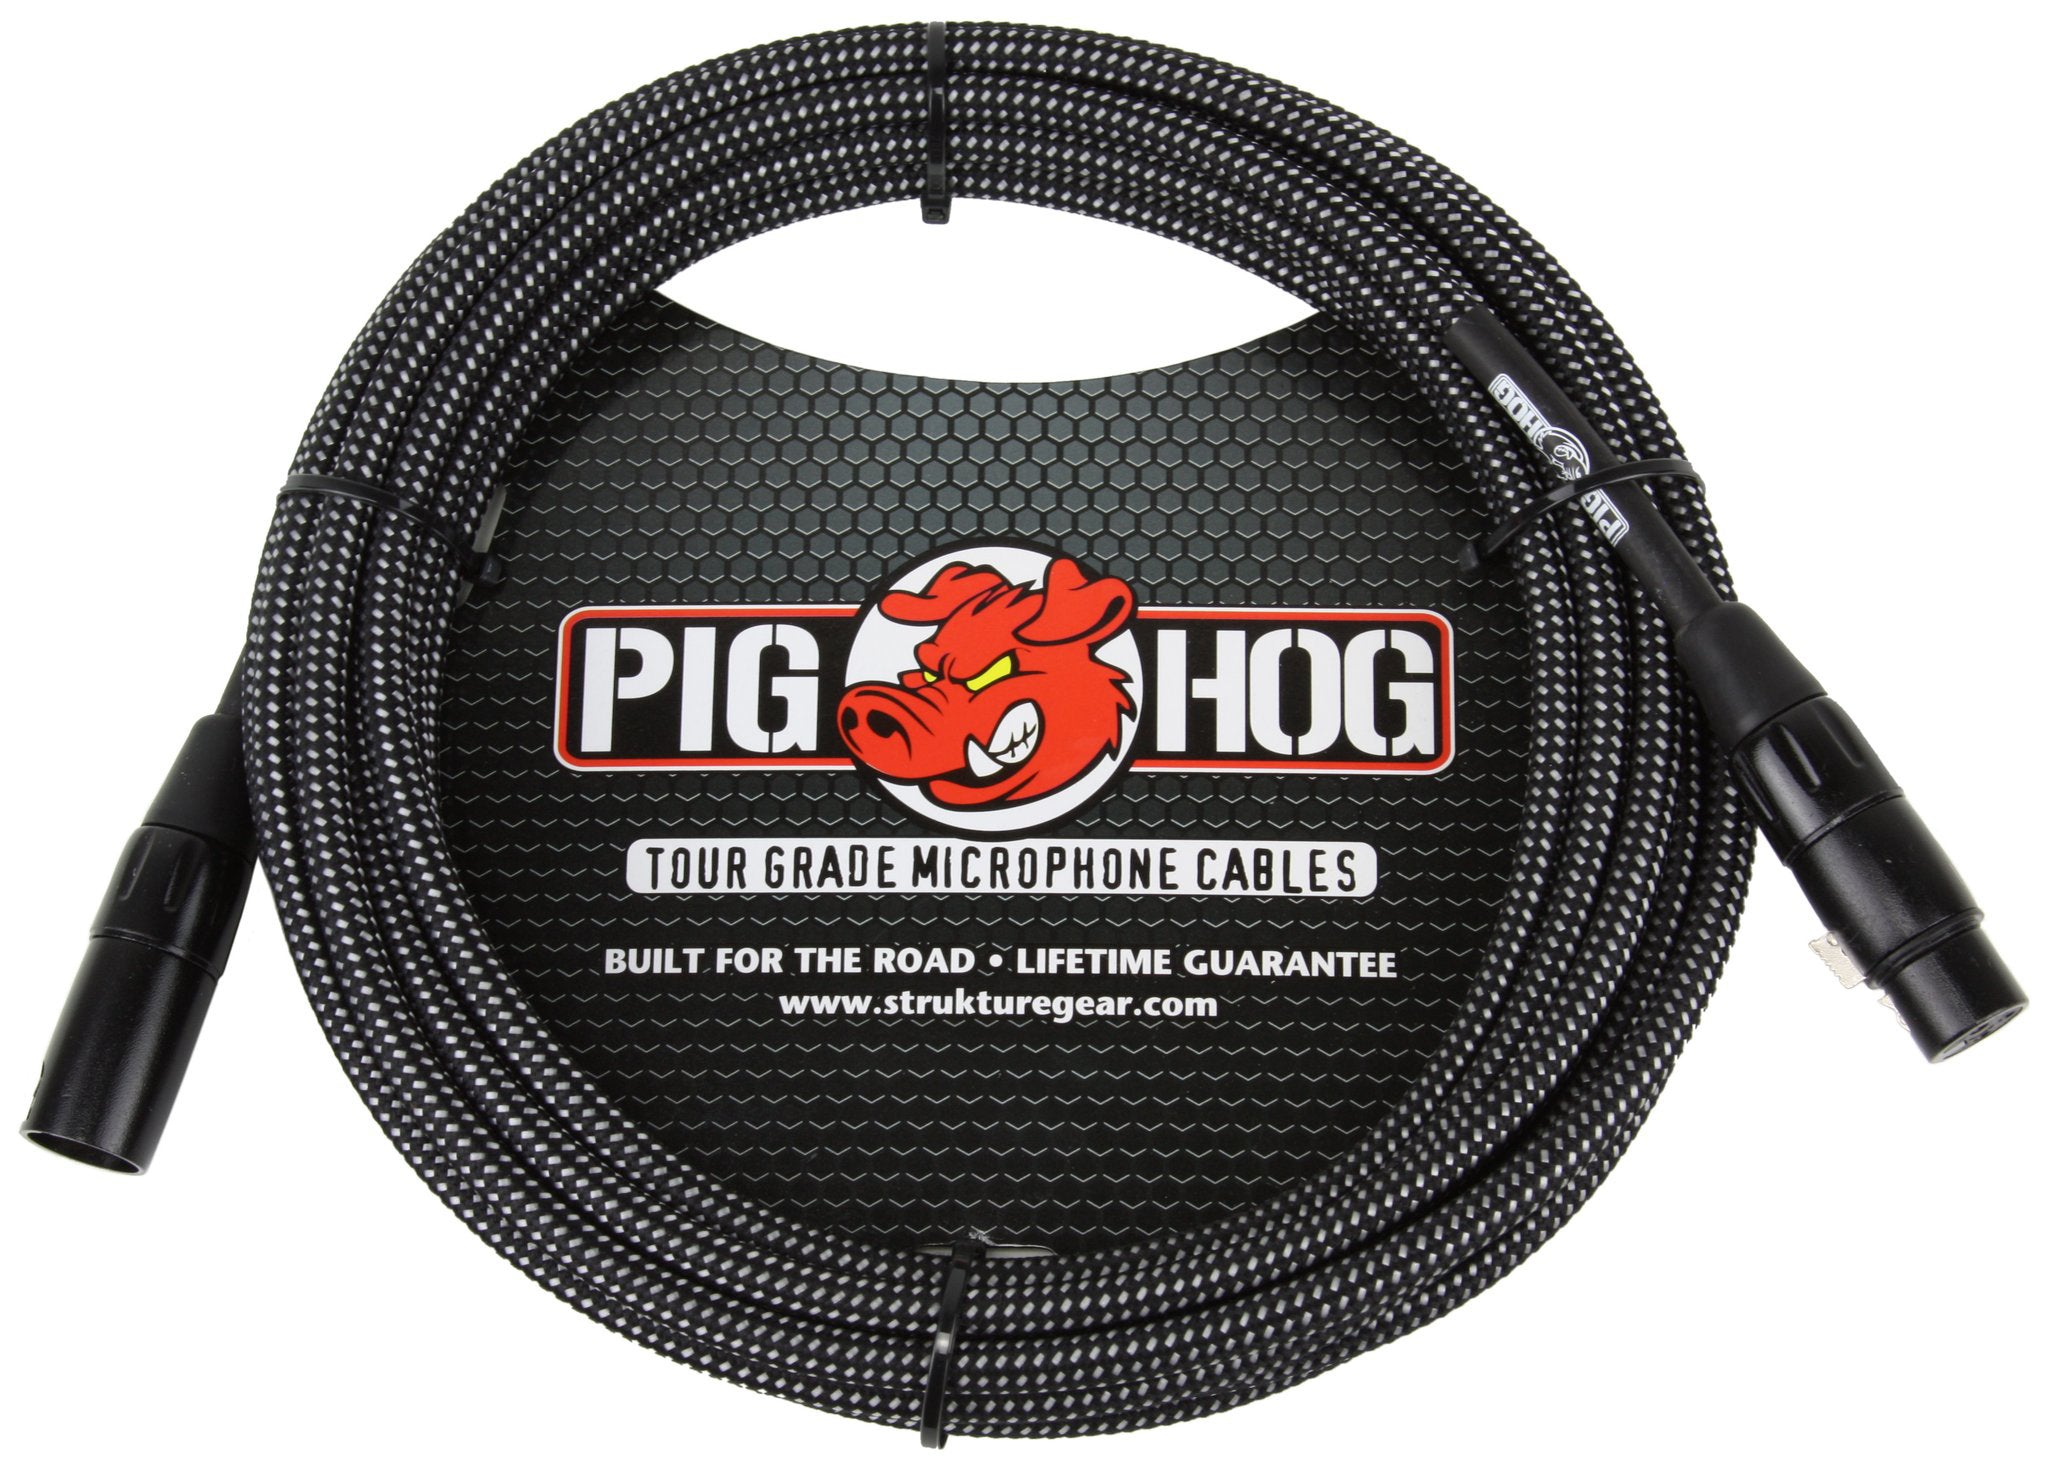 Pig Hog 10' Black/White Woven Microphone Cable, XLR Ends, Lifetime Warranty